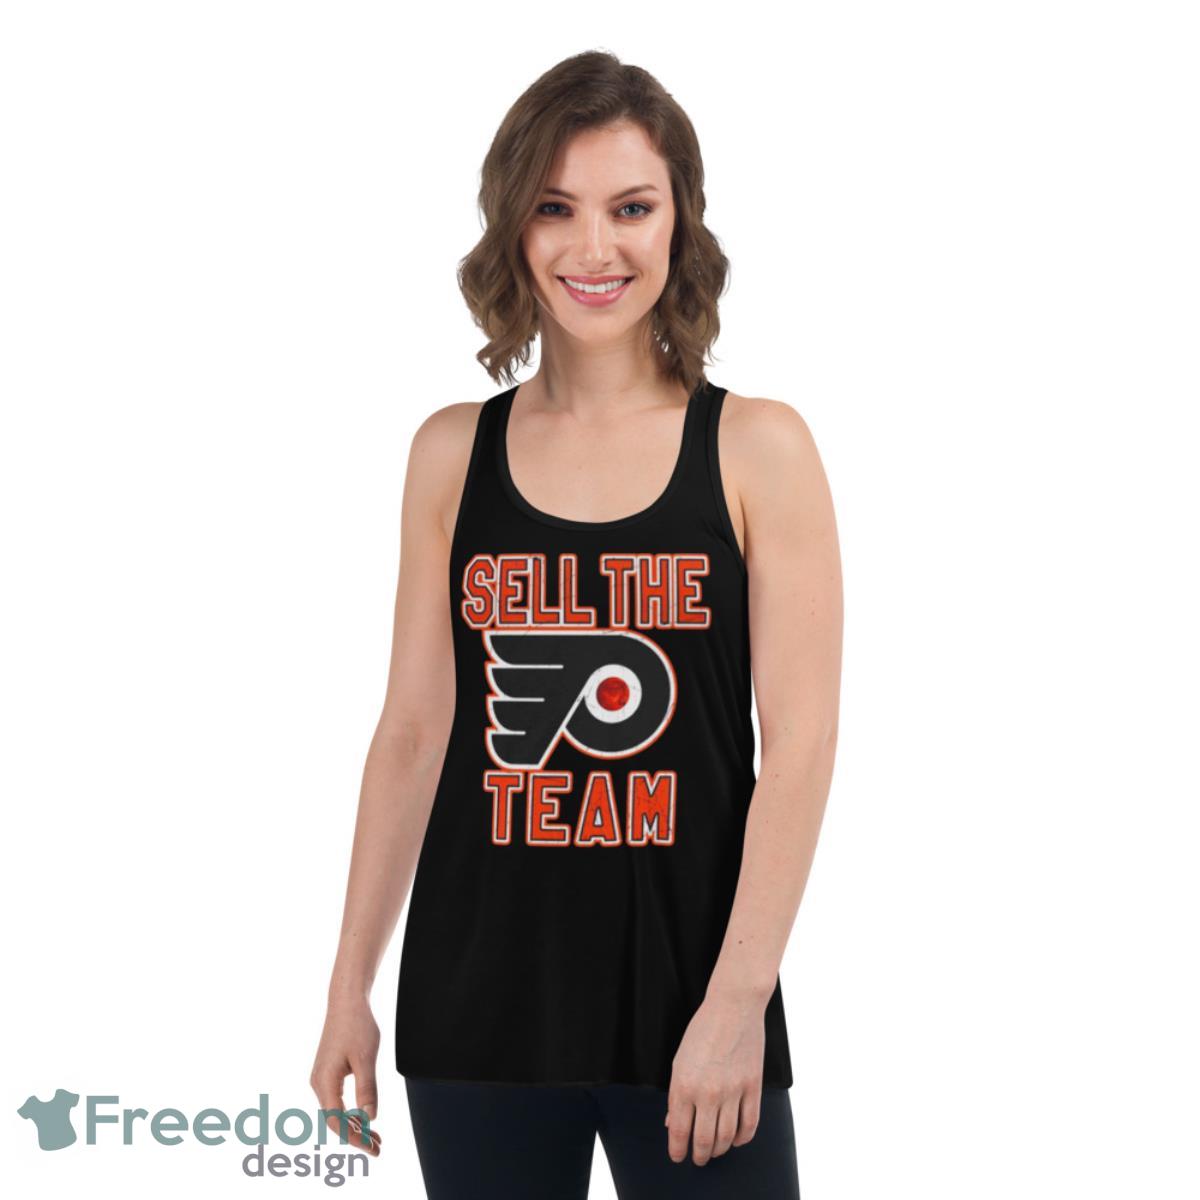 Sell The Team Crying Jordan Philadelphia Flyers Shirt